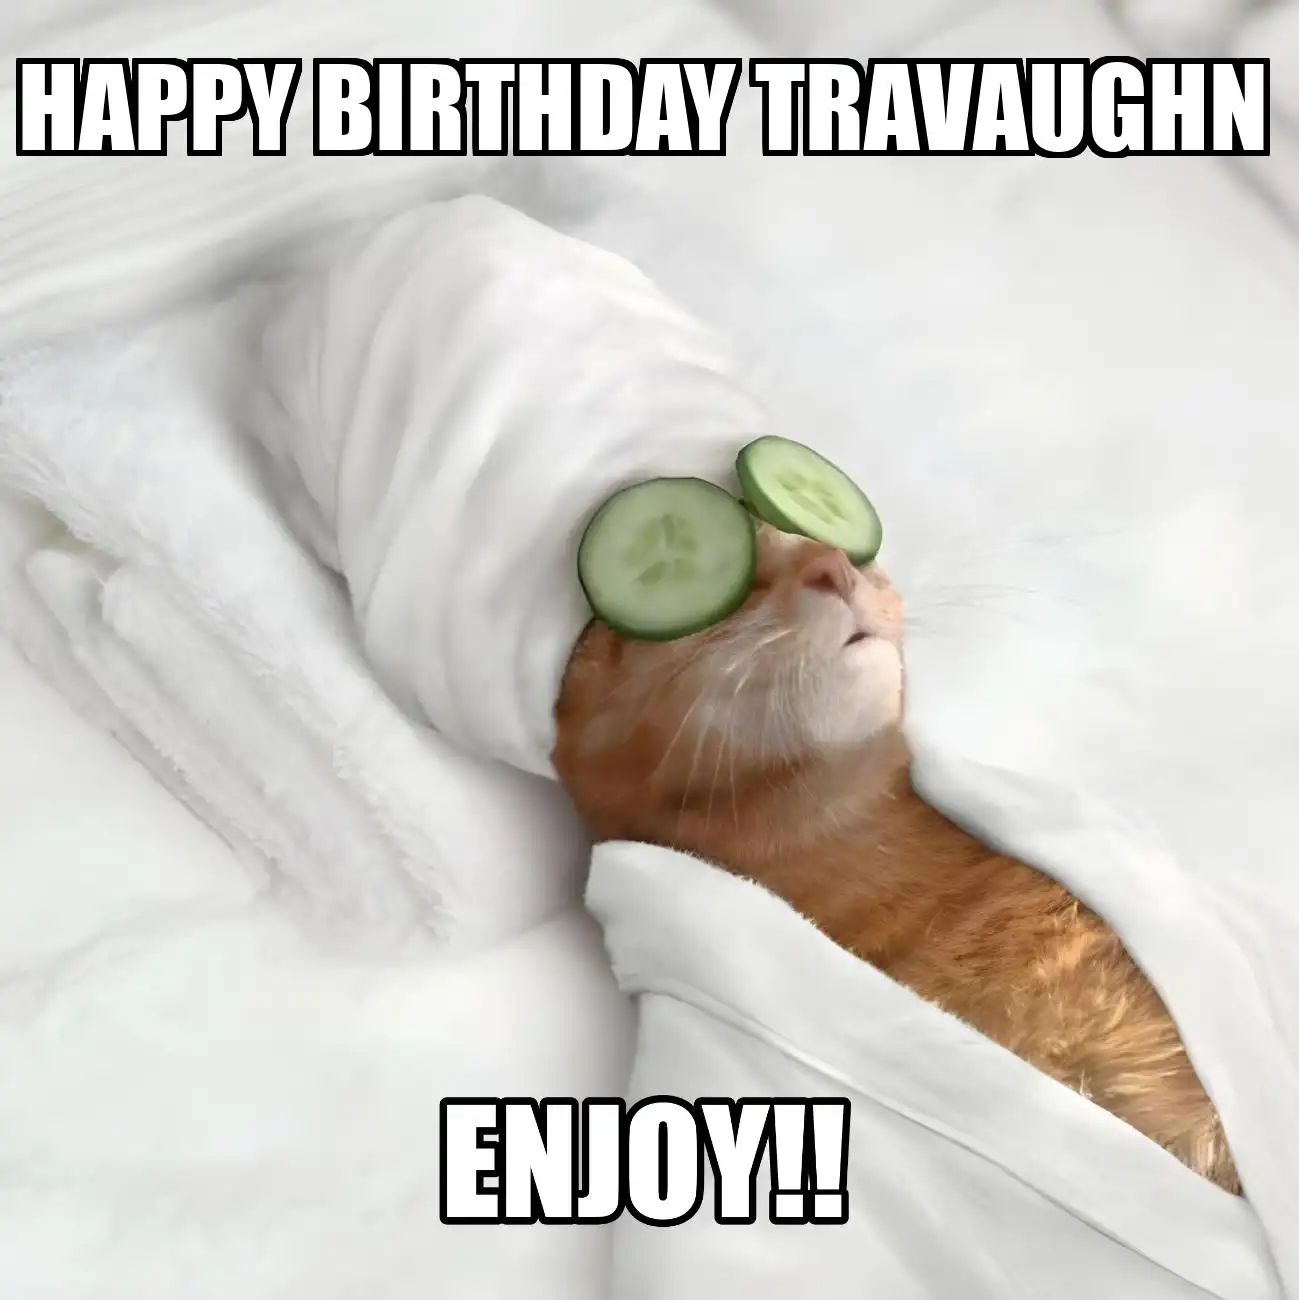 Happy Birthday Travaughn Enjoy Cat Meme